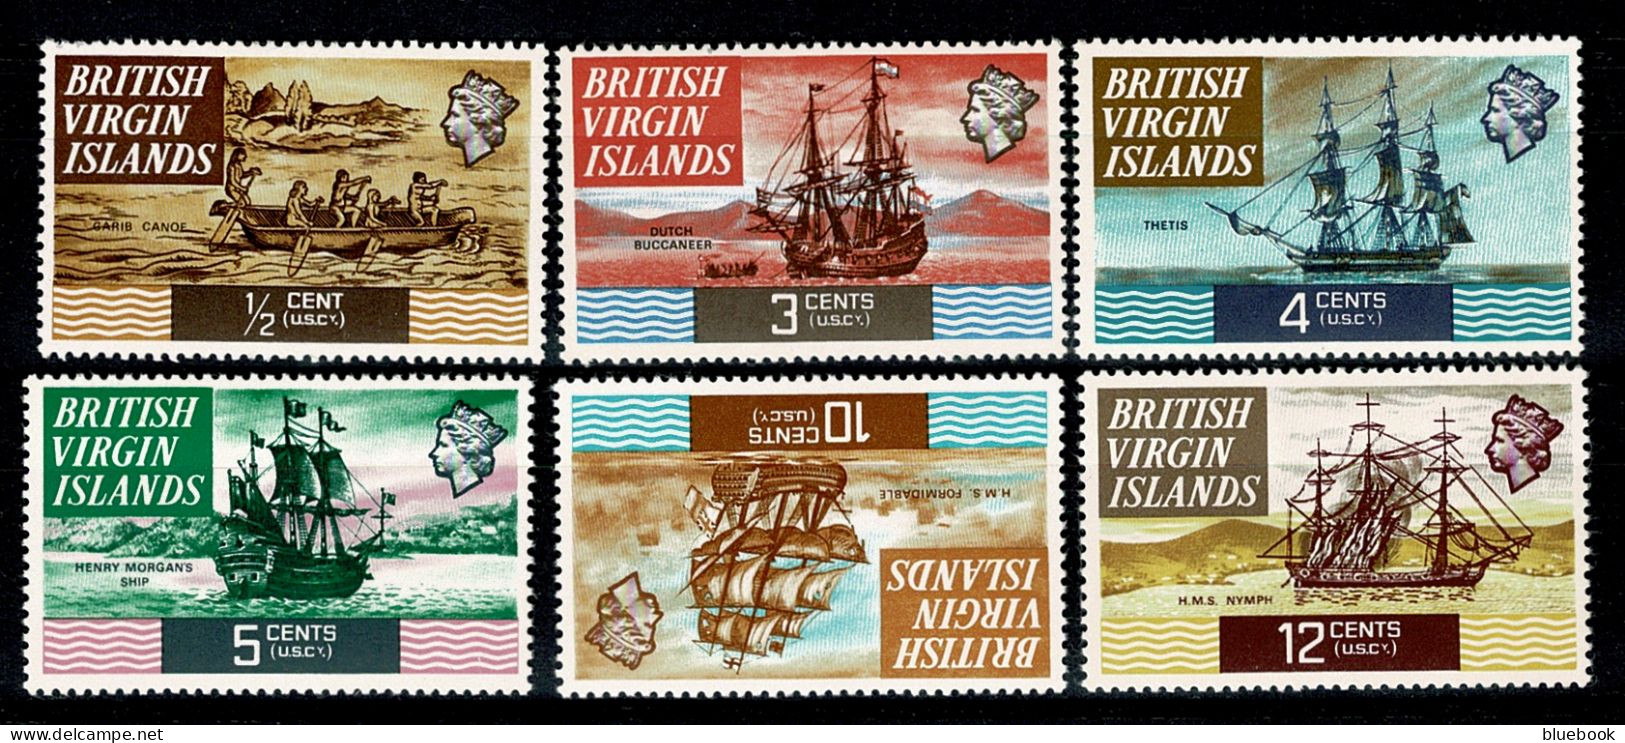 Ref 1641 - British Virgin Islands - 1973 Sailing Ships Set Unmounted Mint MNH SG 295/300 - 10c Inverted Watermark - British Virgin Islands